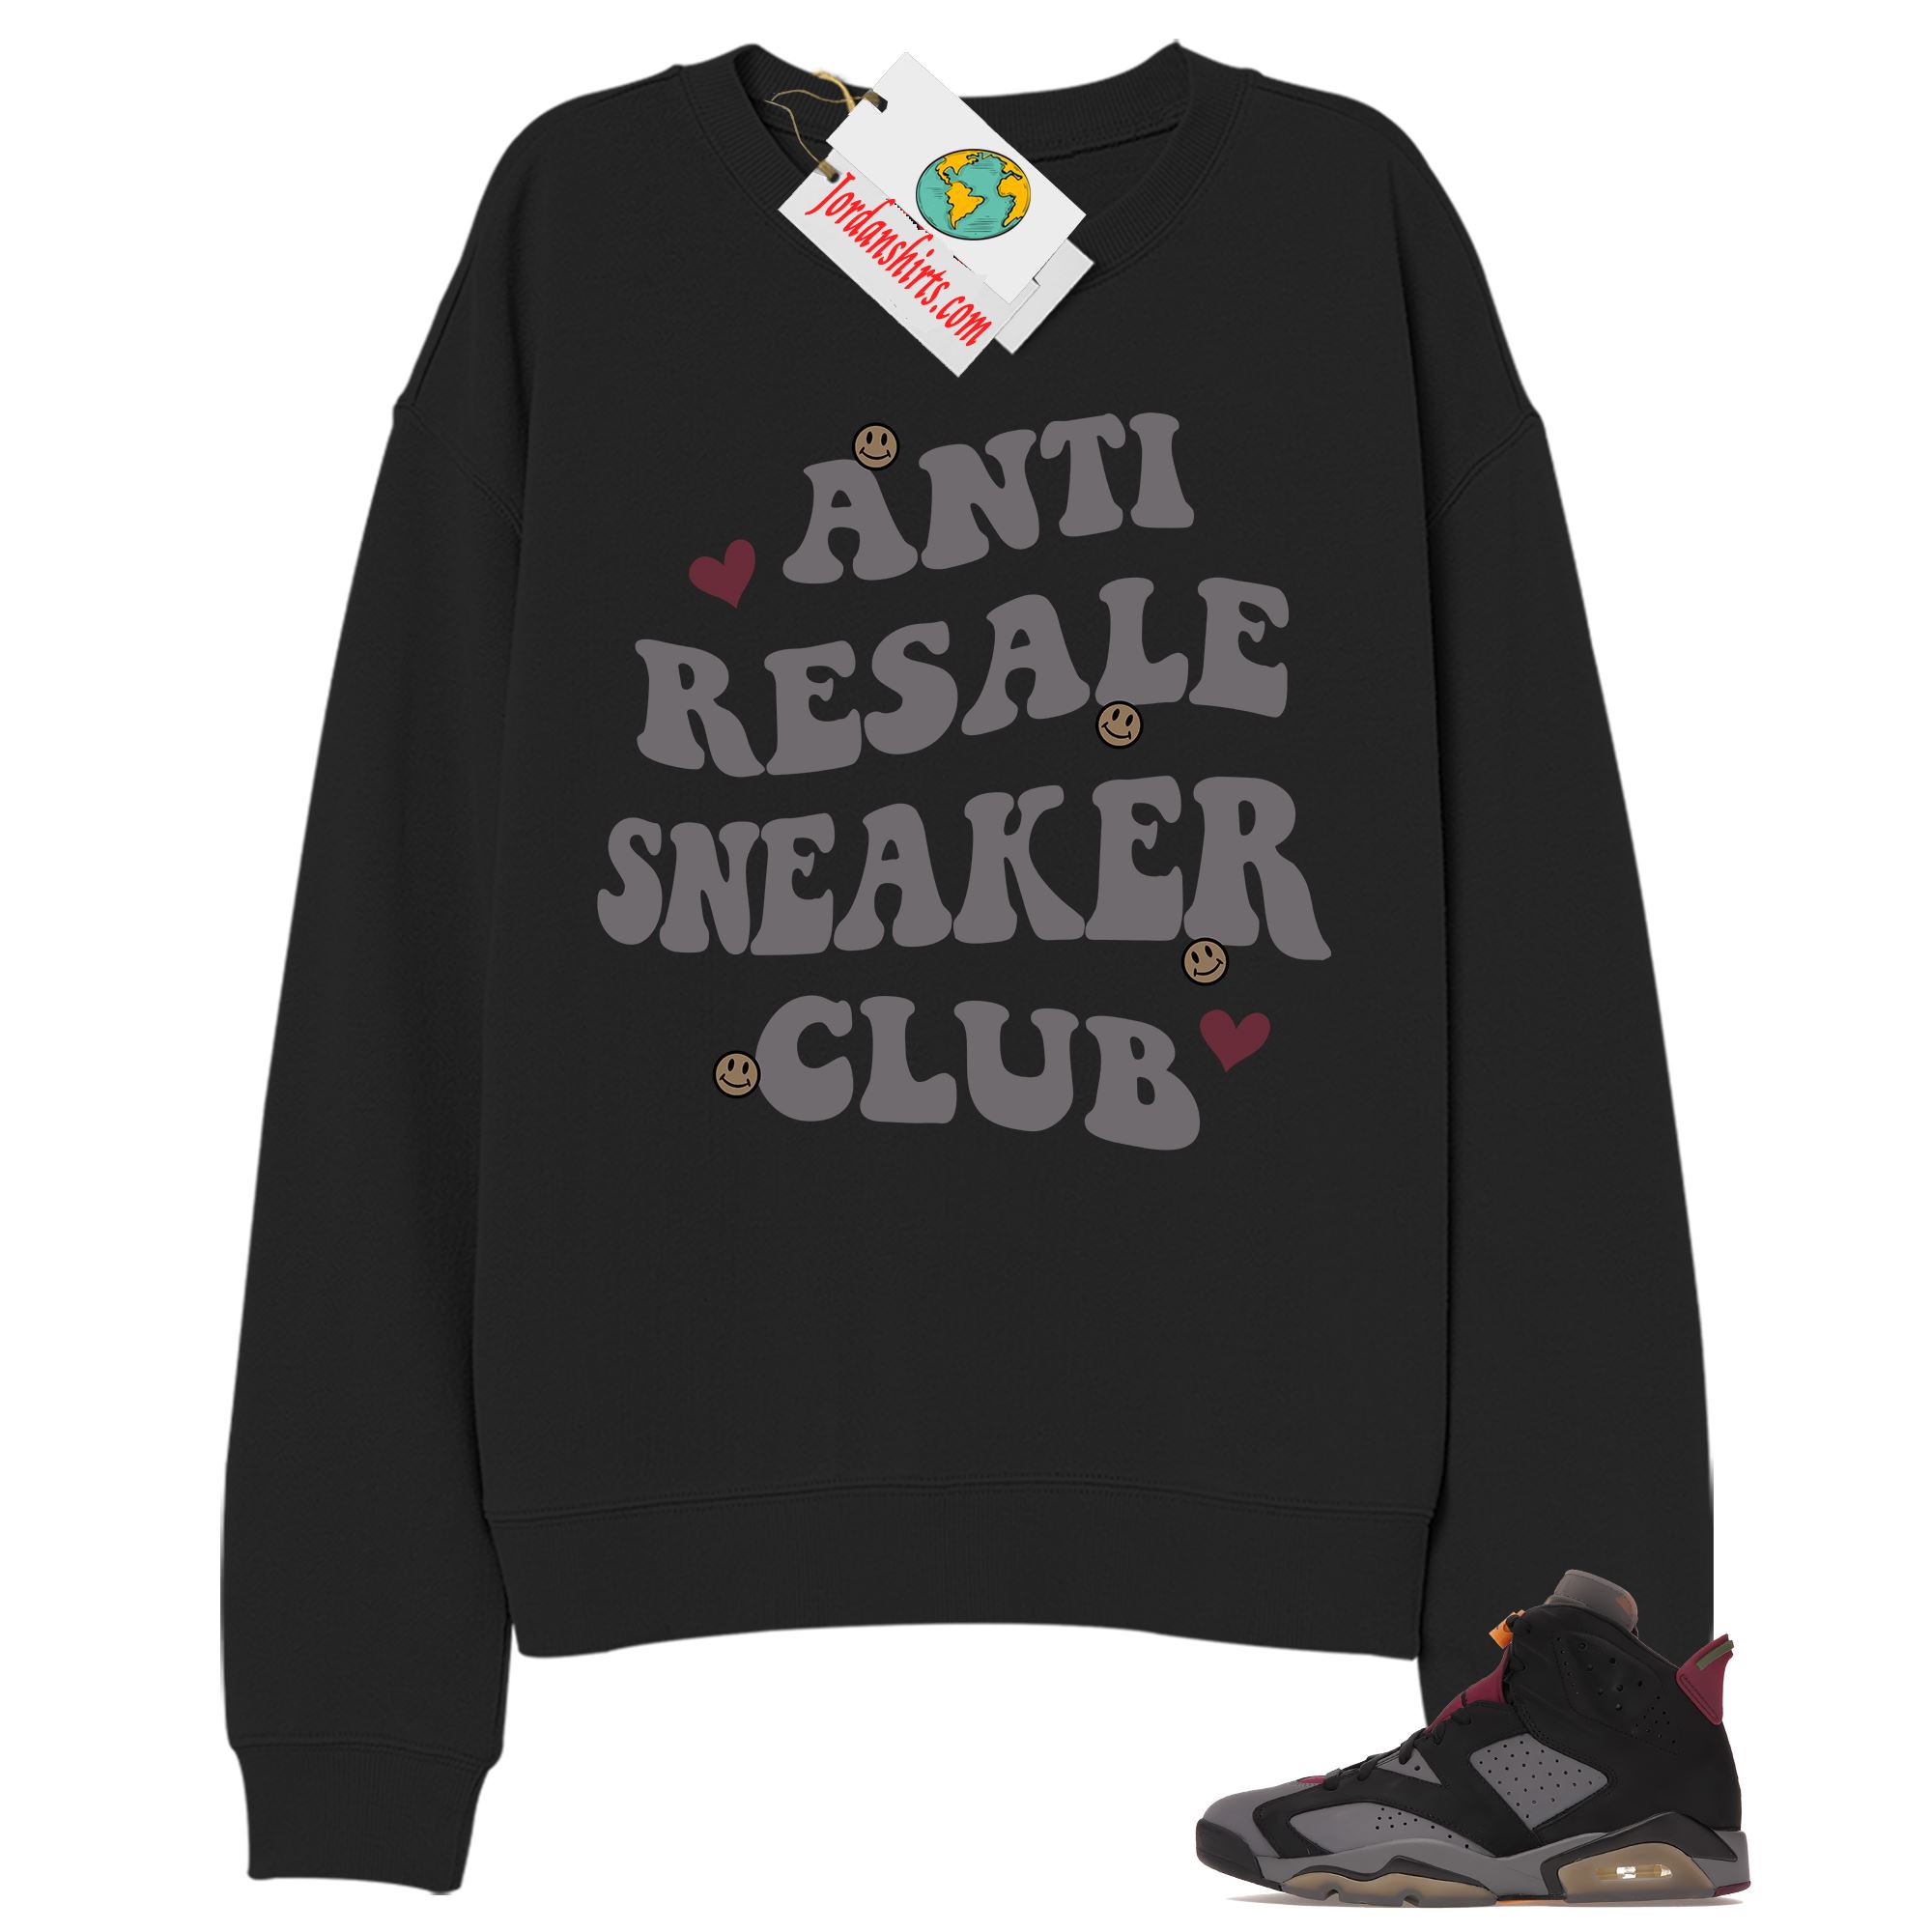 Jordan 6 Sweatshirt, Anti Resale Sneaker Club Black Sweatshirt Air Jordan 6 Bordeaux 6s Full Size Up To 5xl